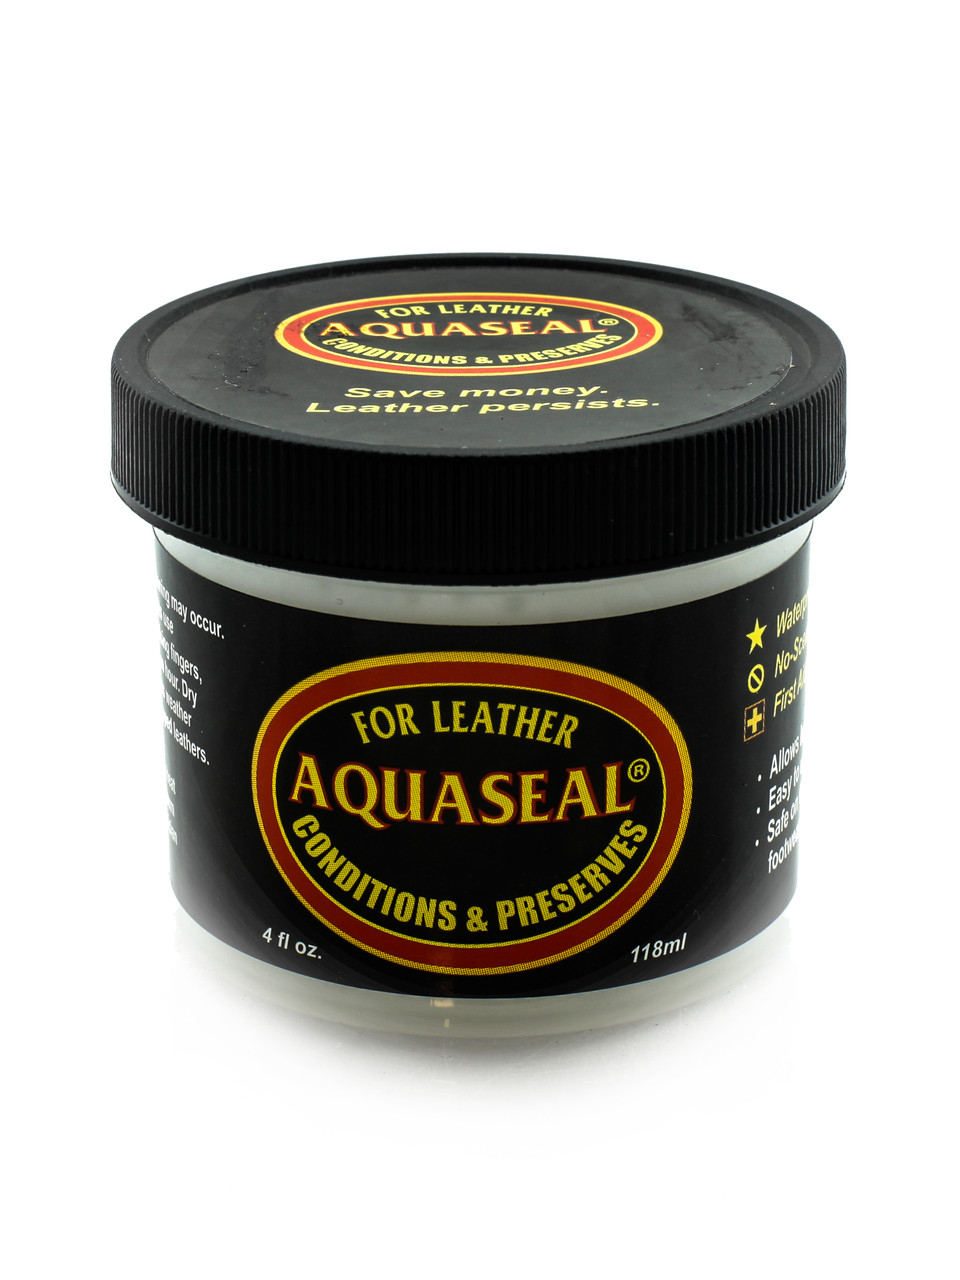 Aquaseal Leather Waterproofing Cream - 4 oz jar